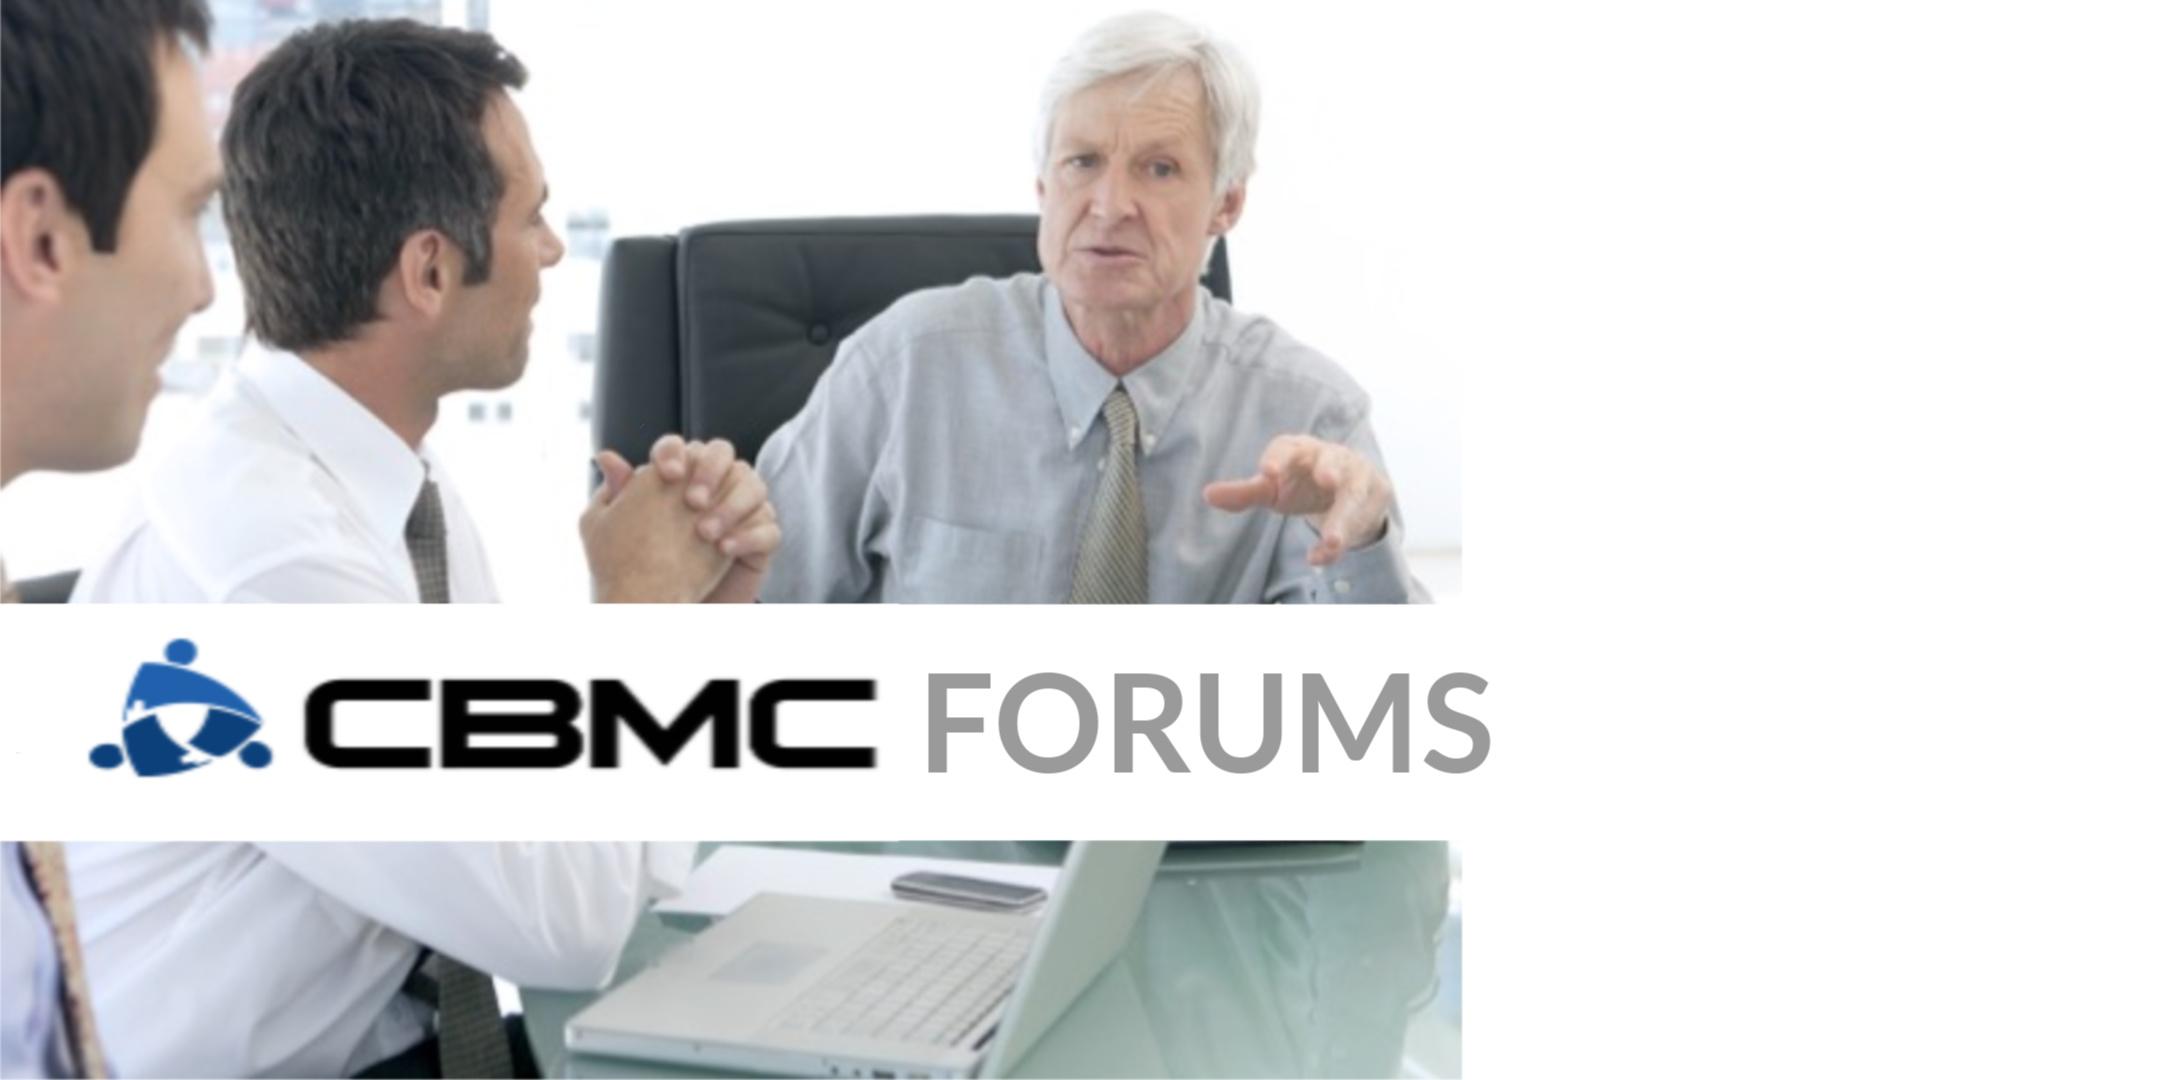 CBMC forums men